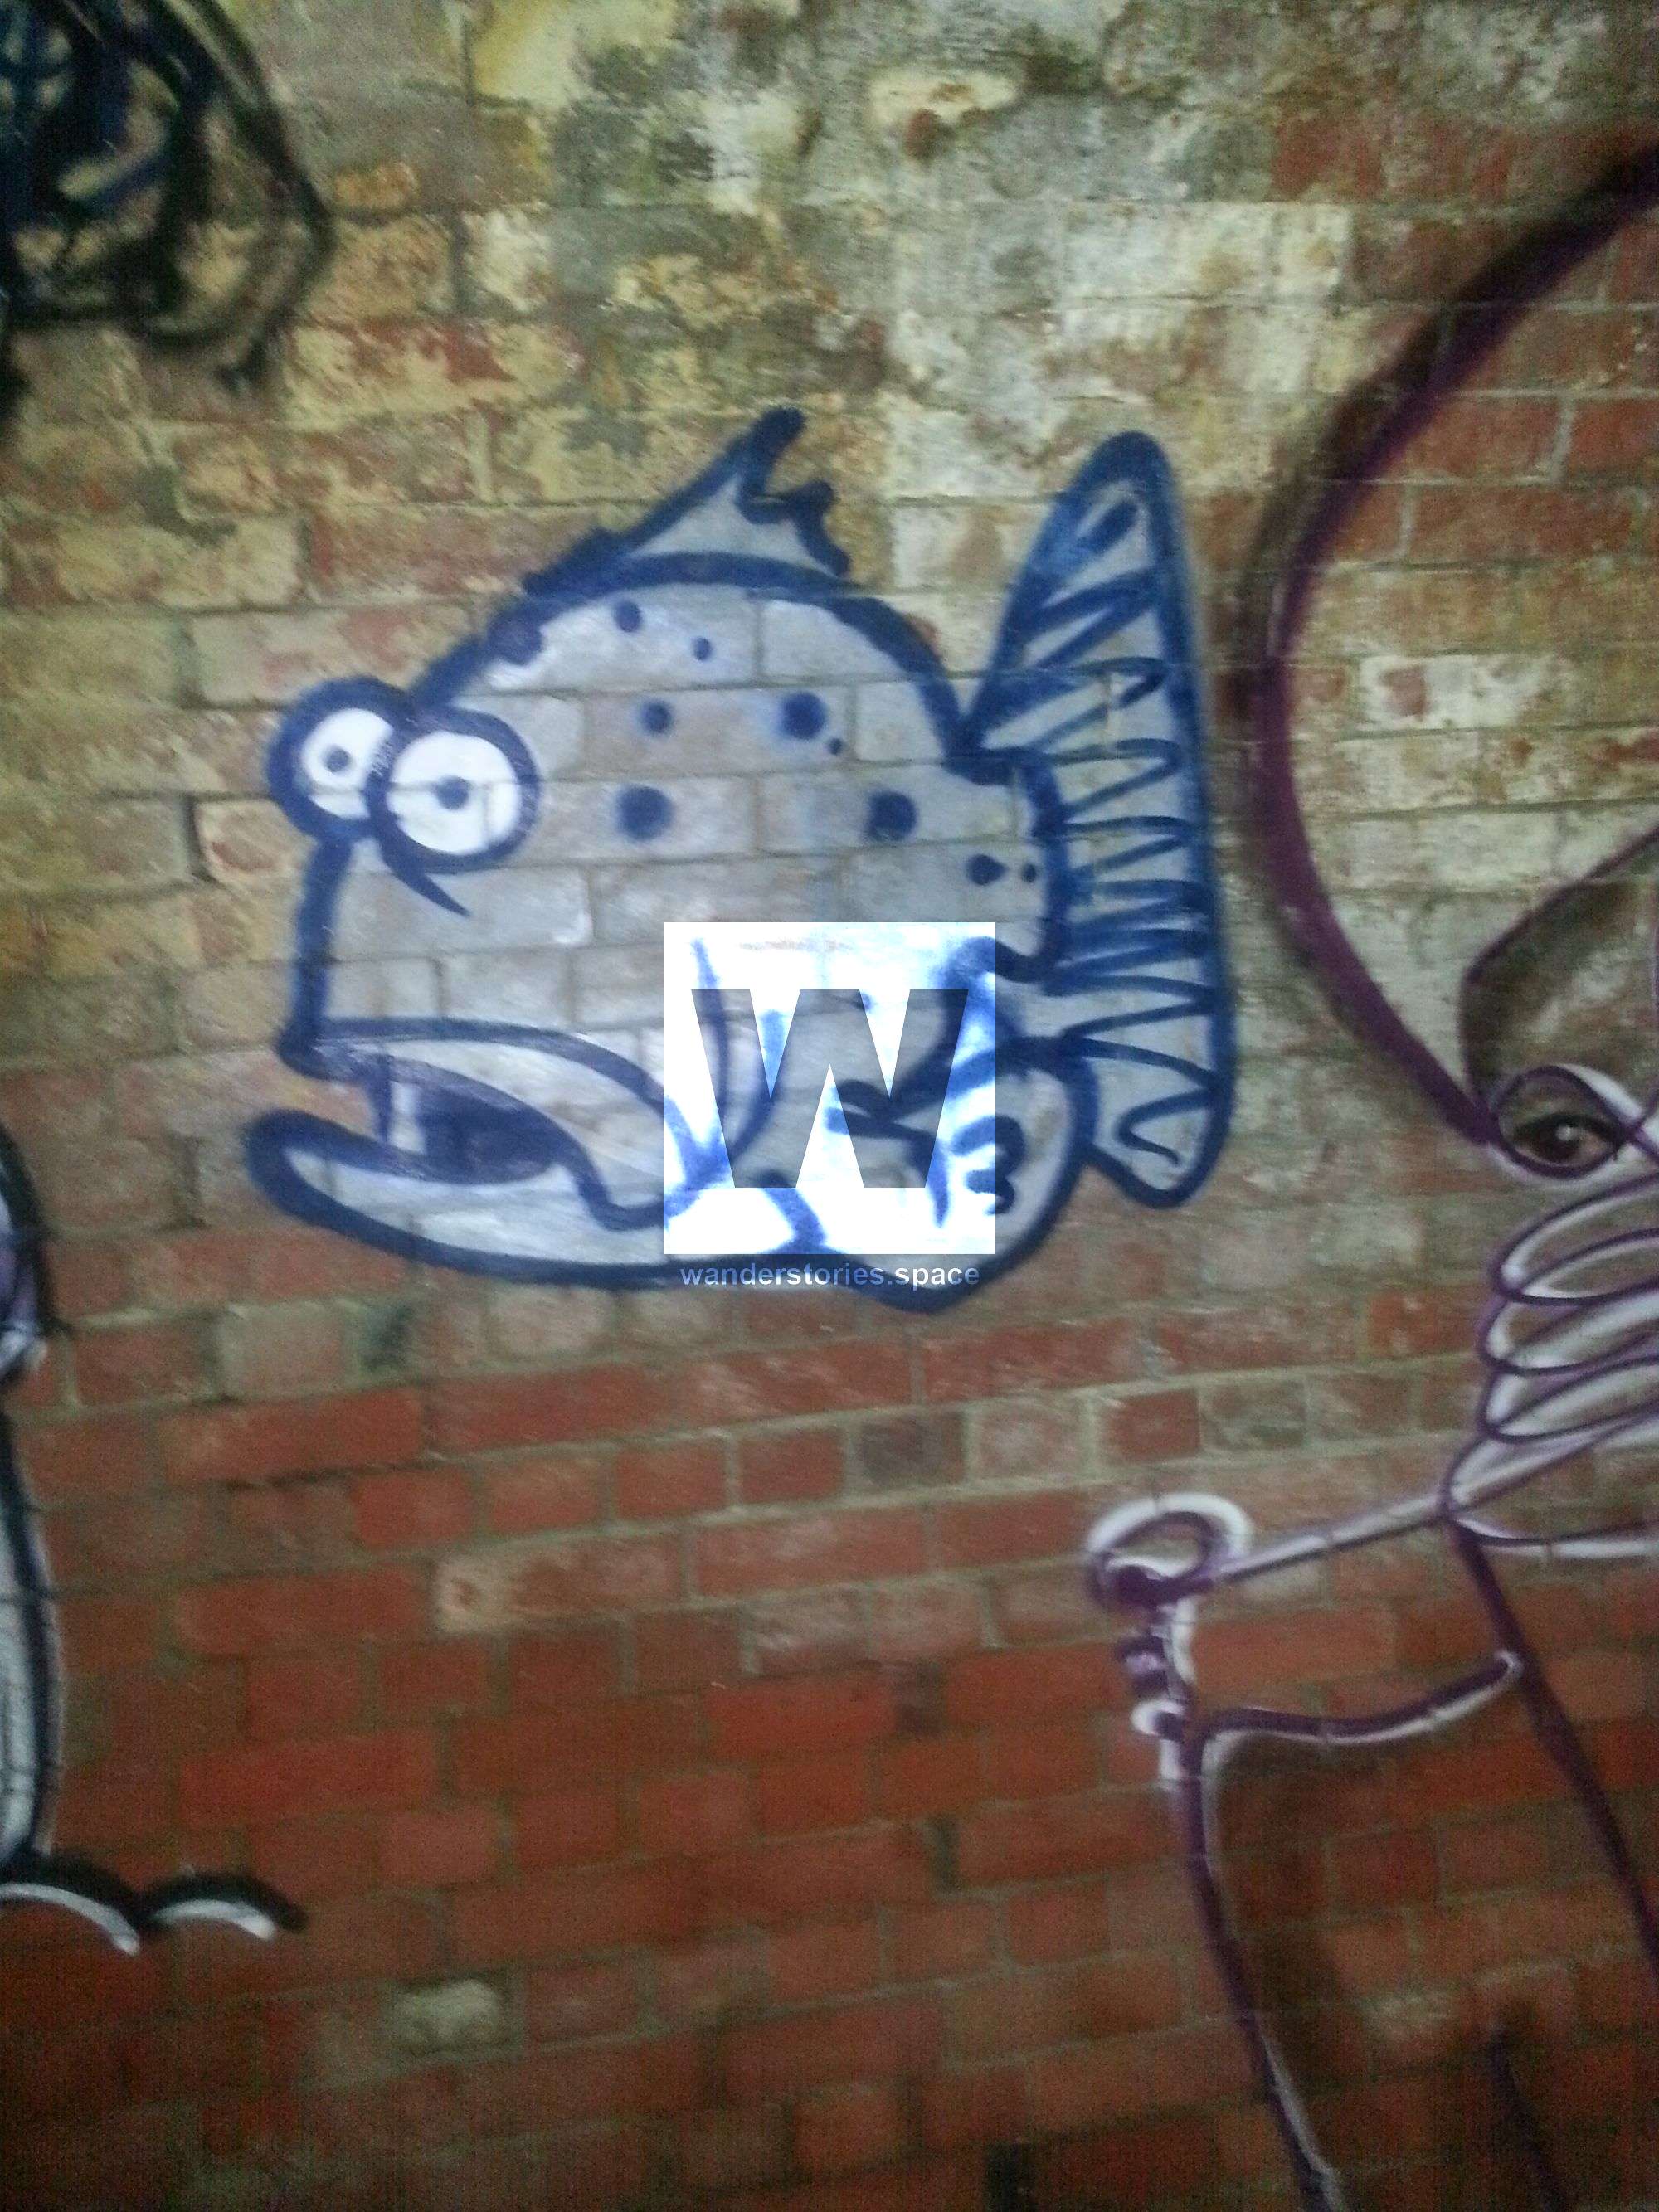 townsville stormwater drain fish graffiti